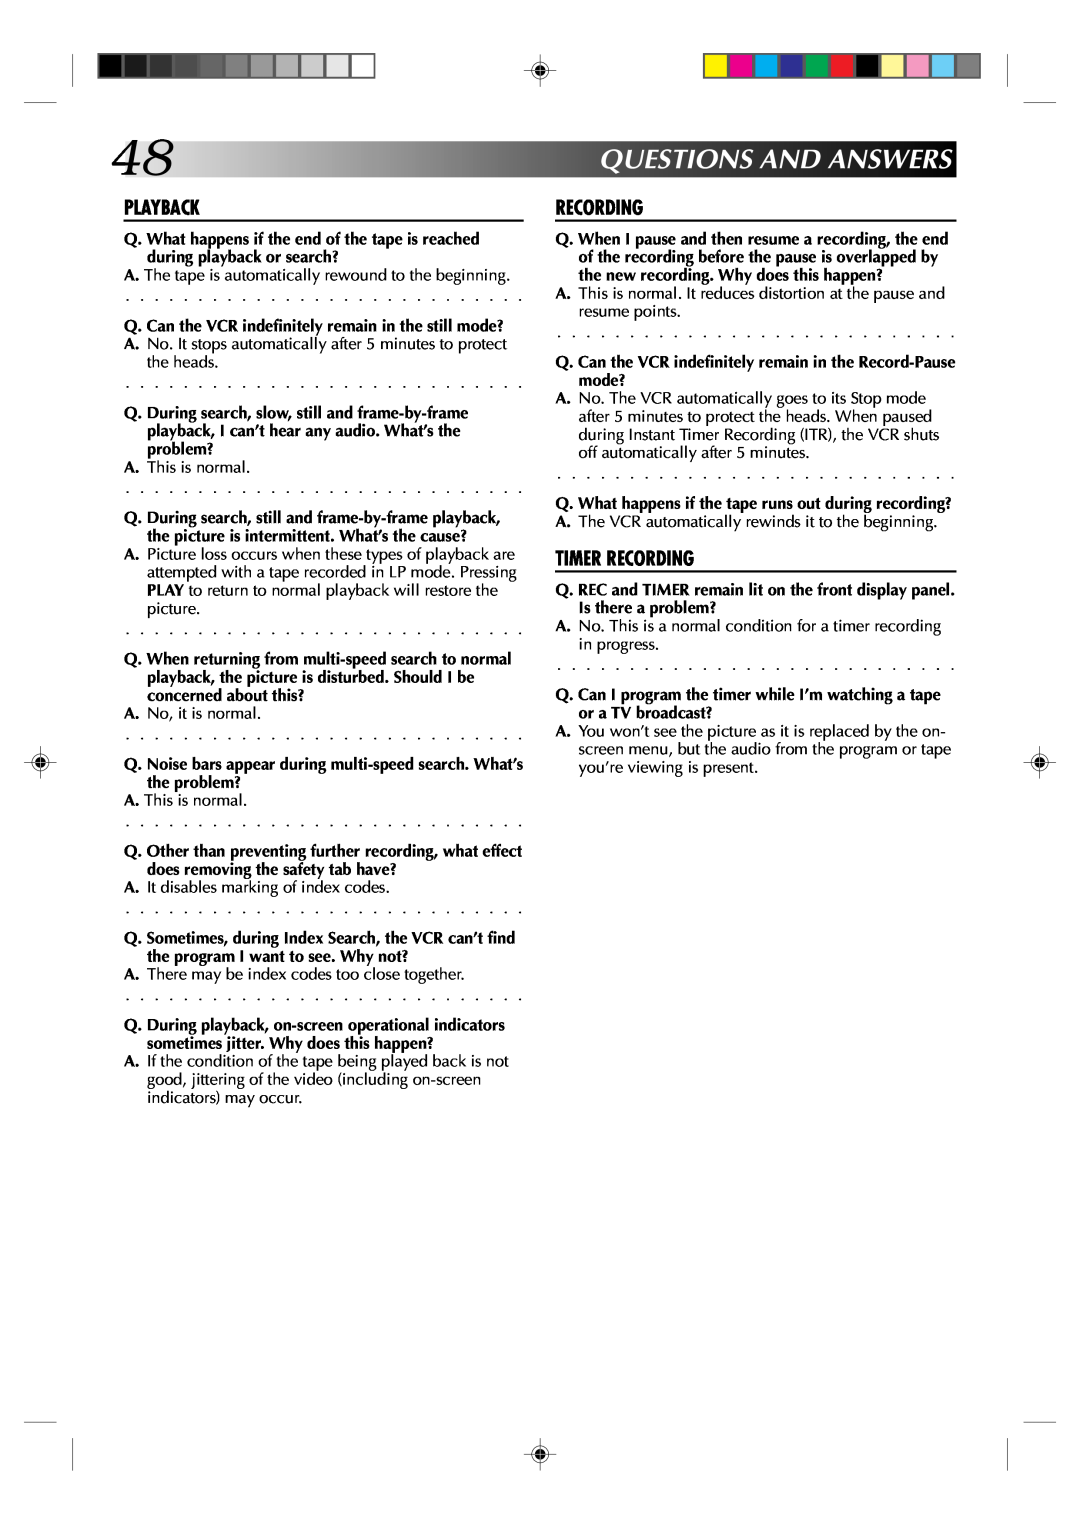 JVC HR-VP434U manual 48QUESTIONSANDANSWERS 